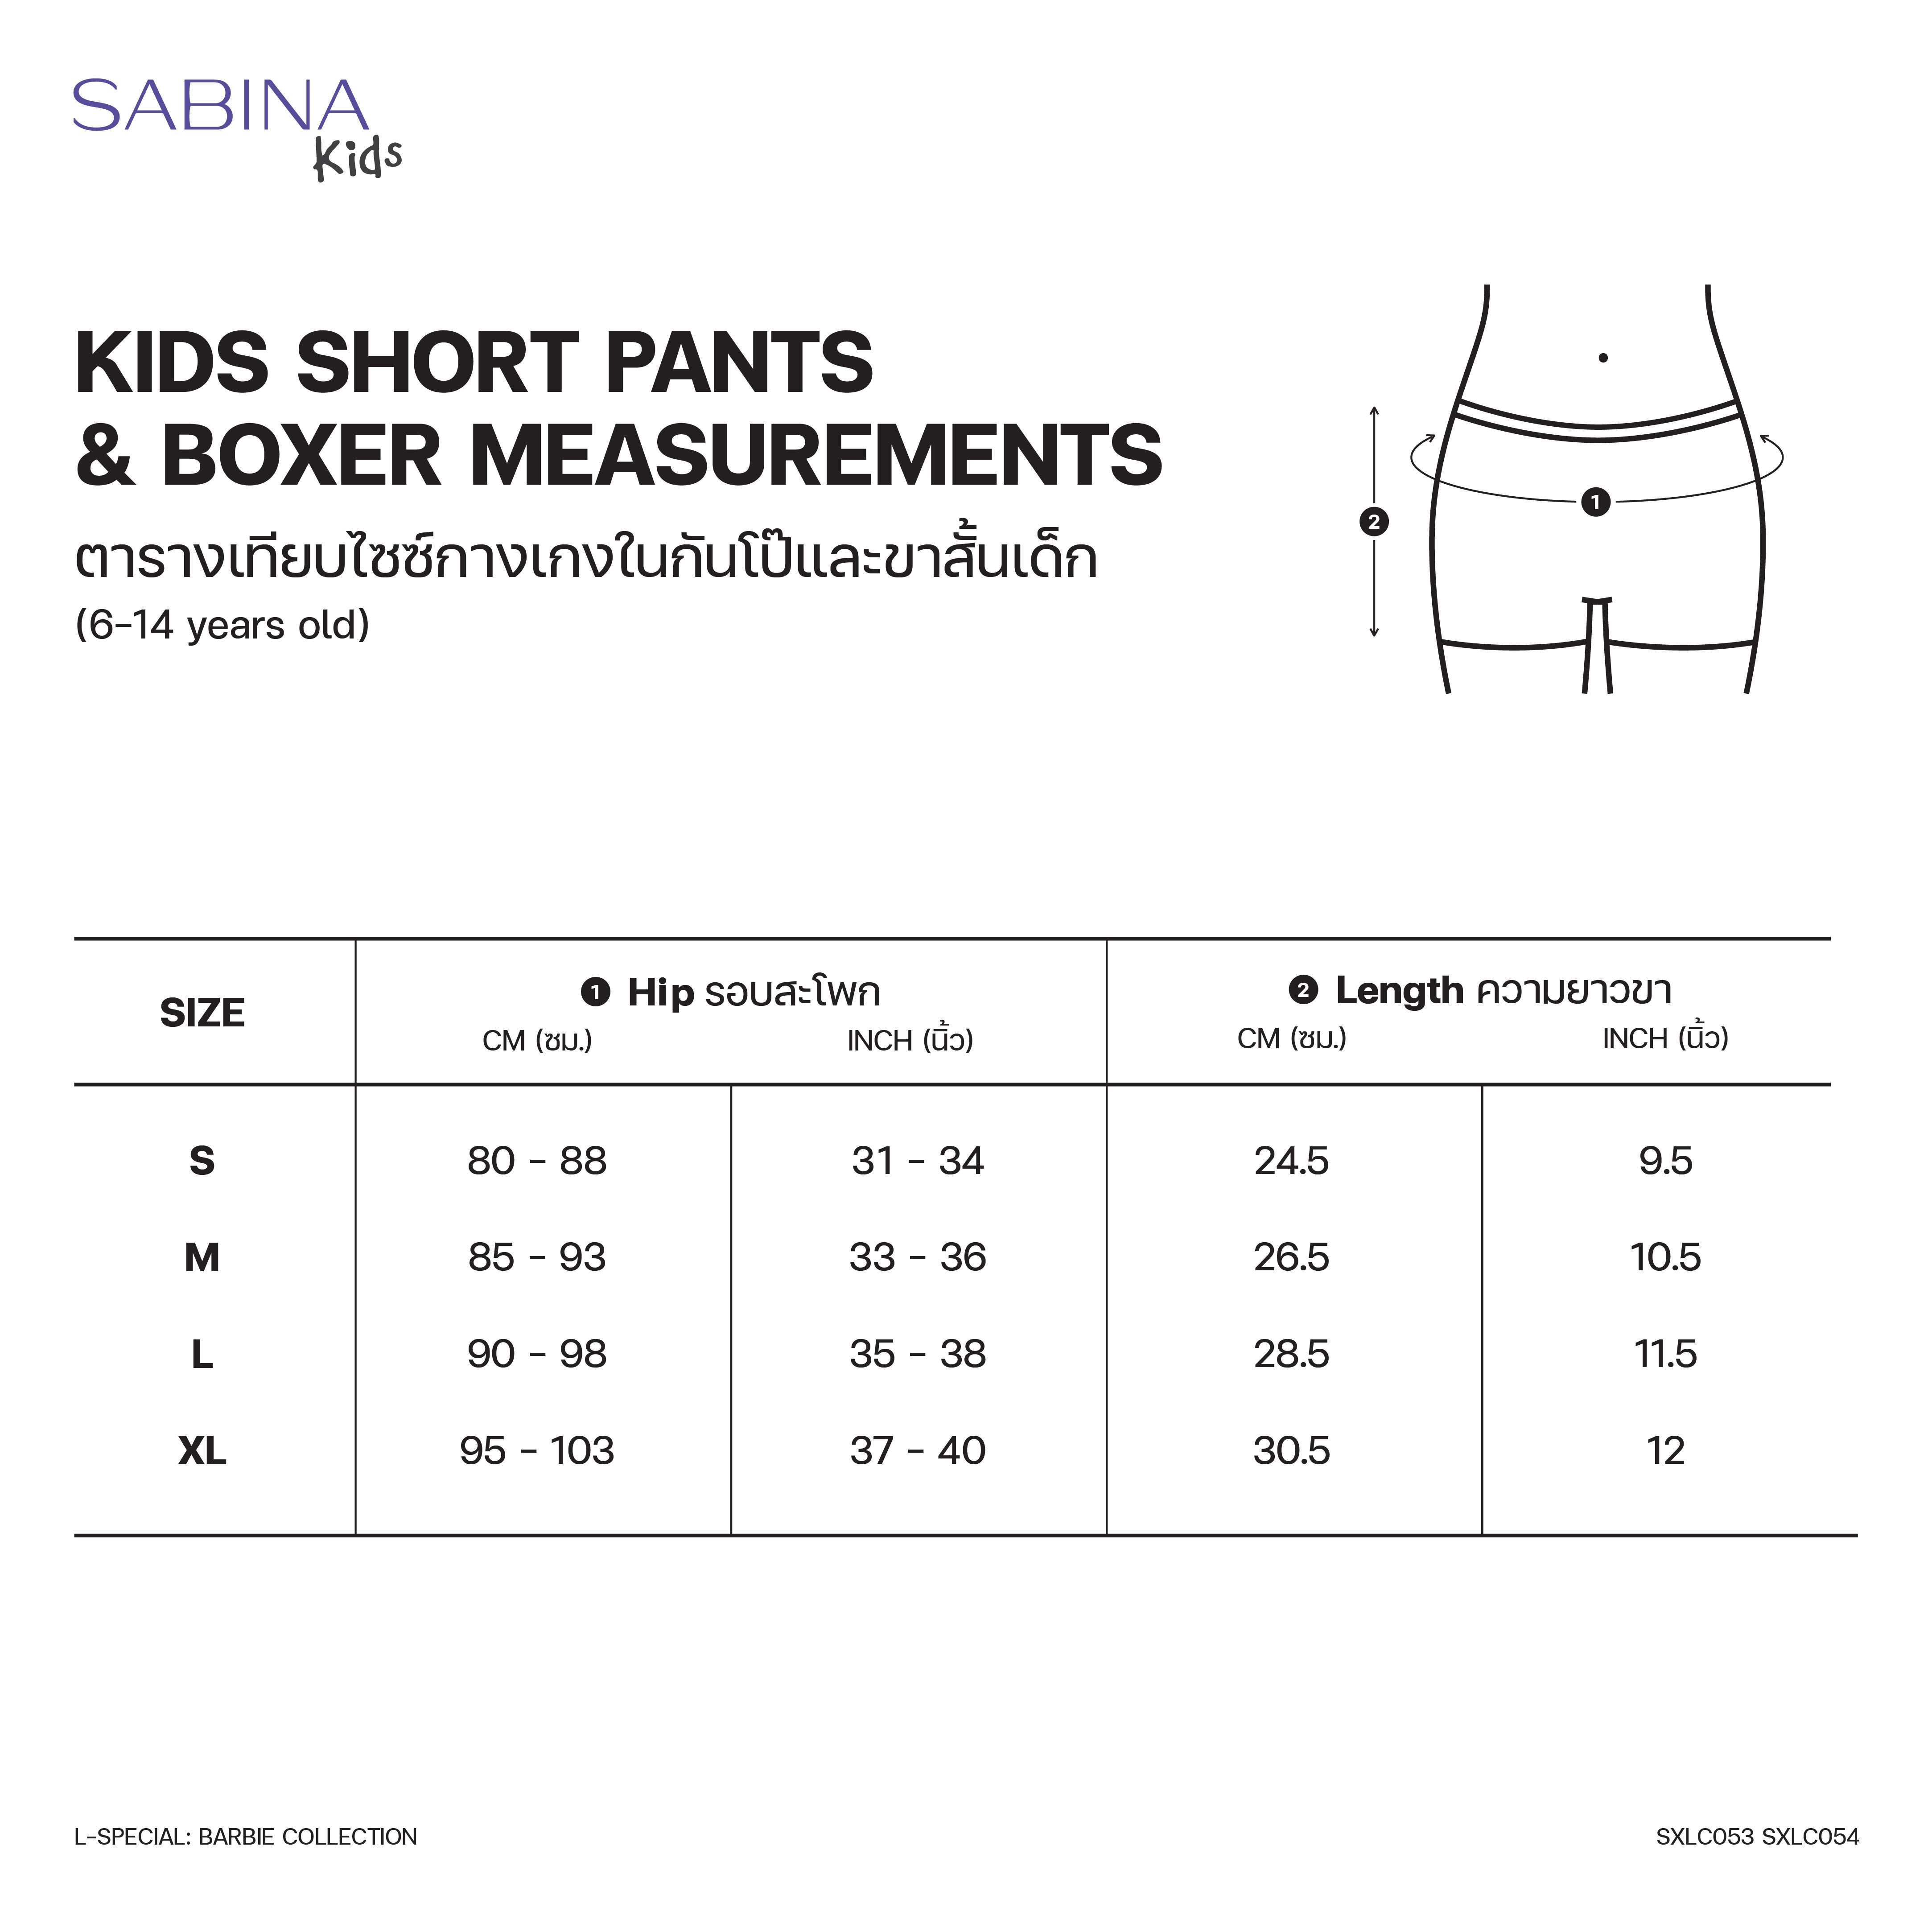 Shop 4 You - Sabina bra size chart